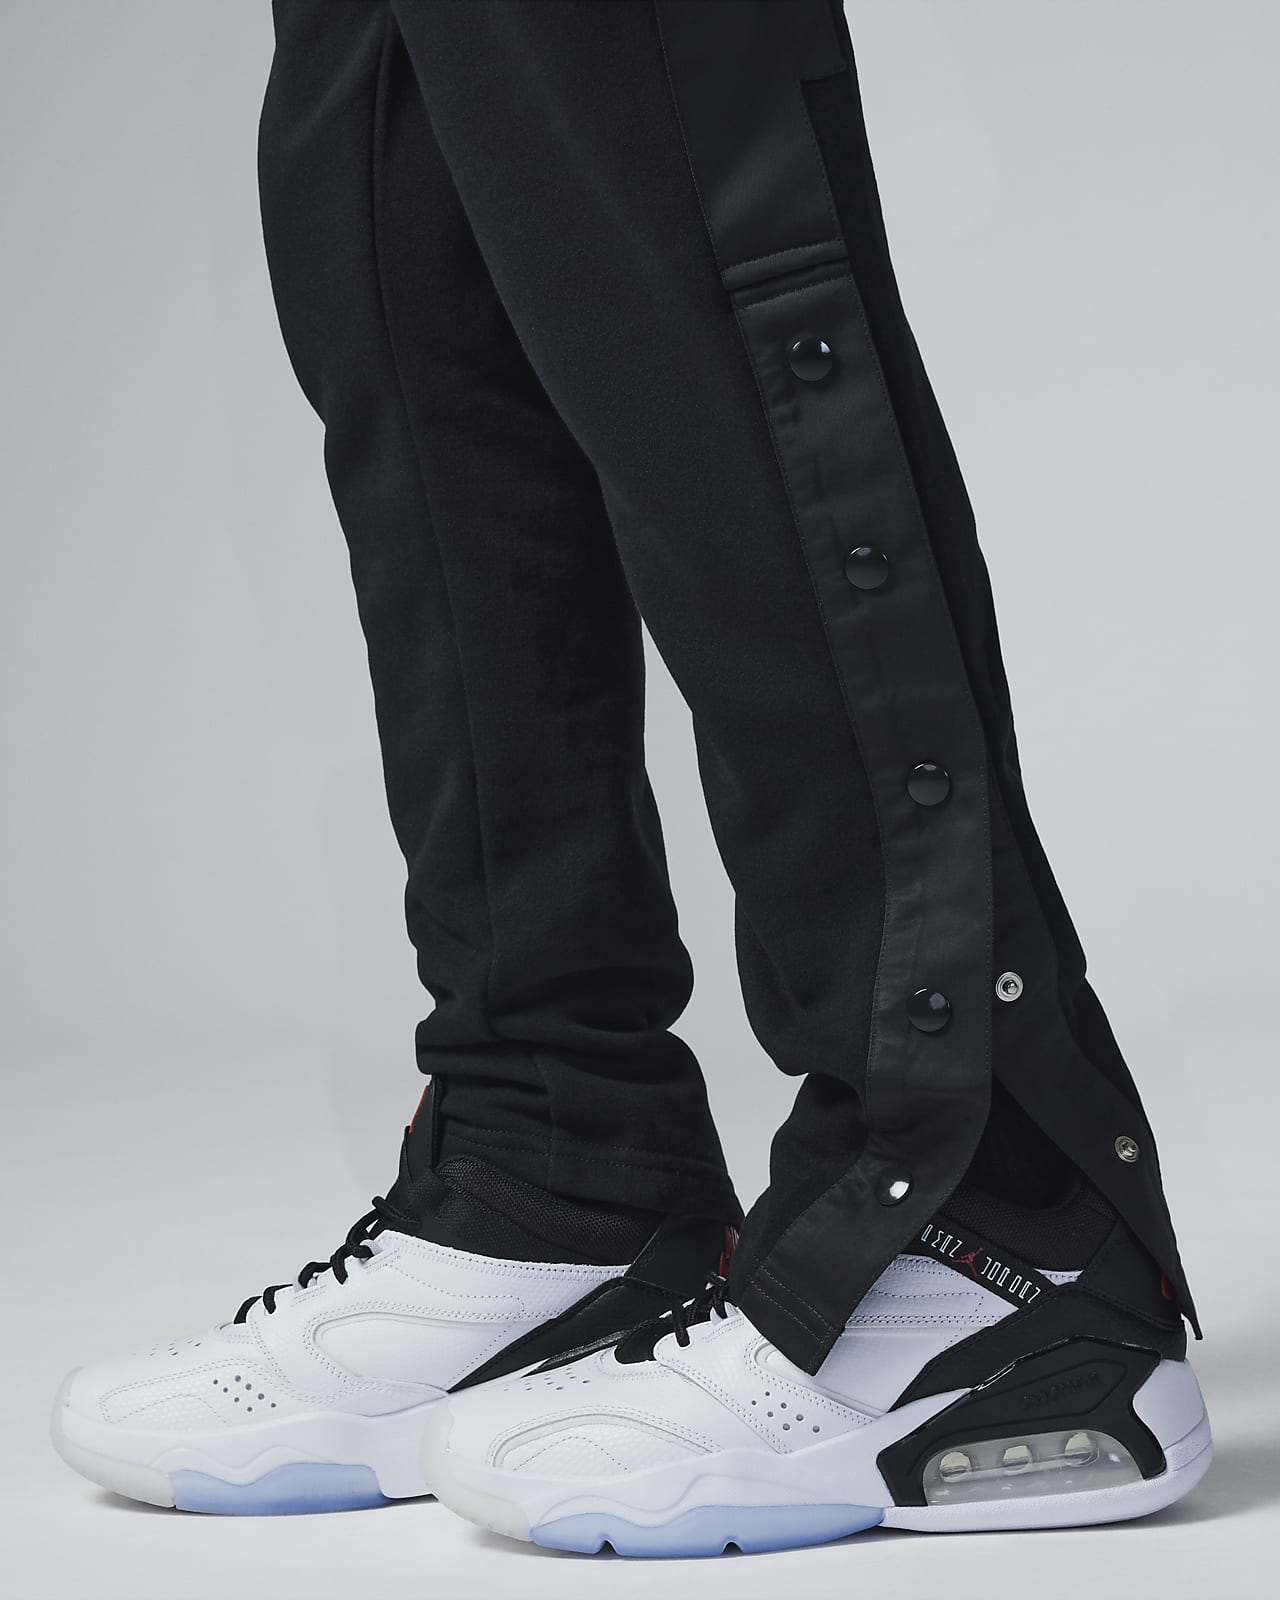 Jordan MJ Zion Crossover Pants Pantalón Niño/a. Nike